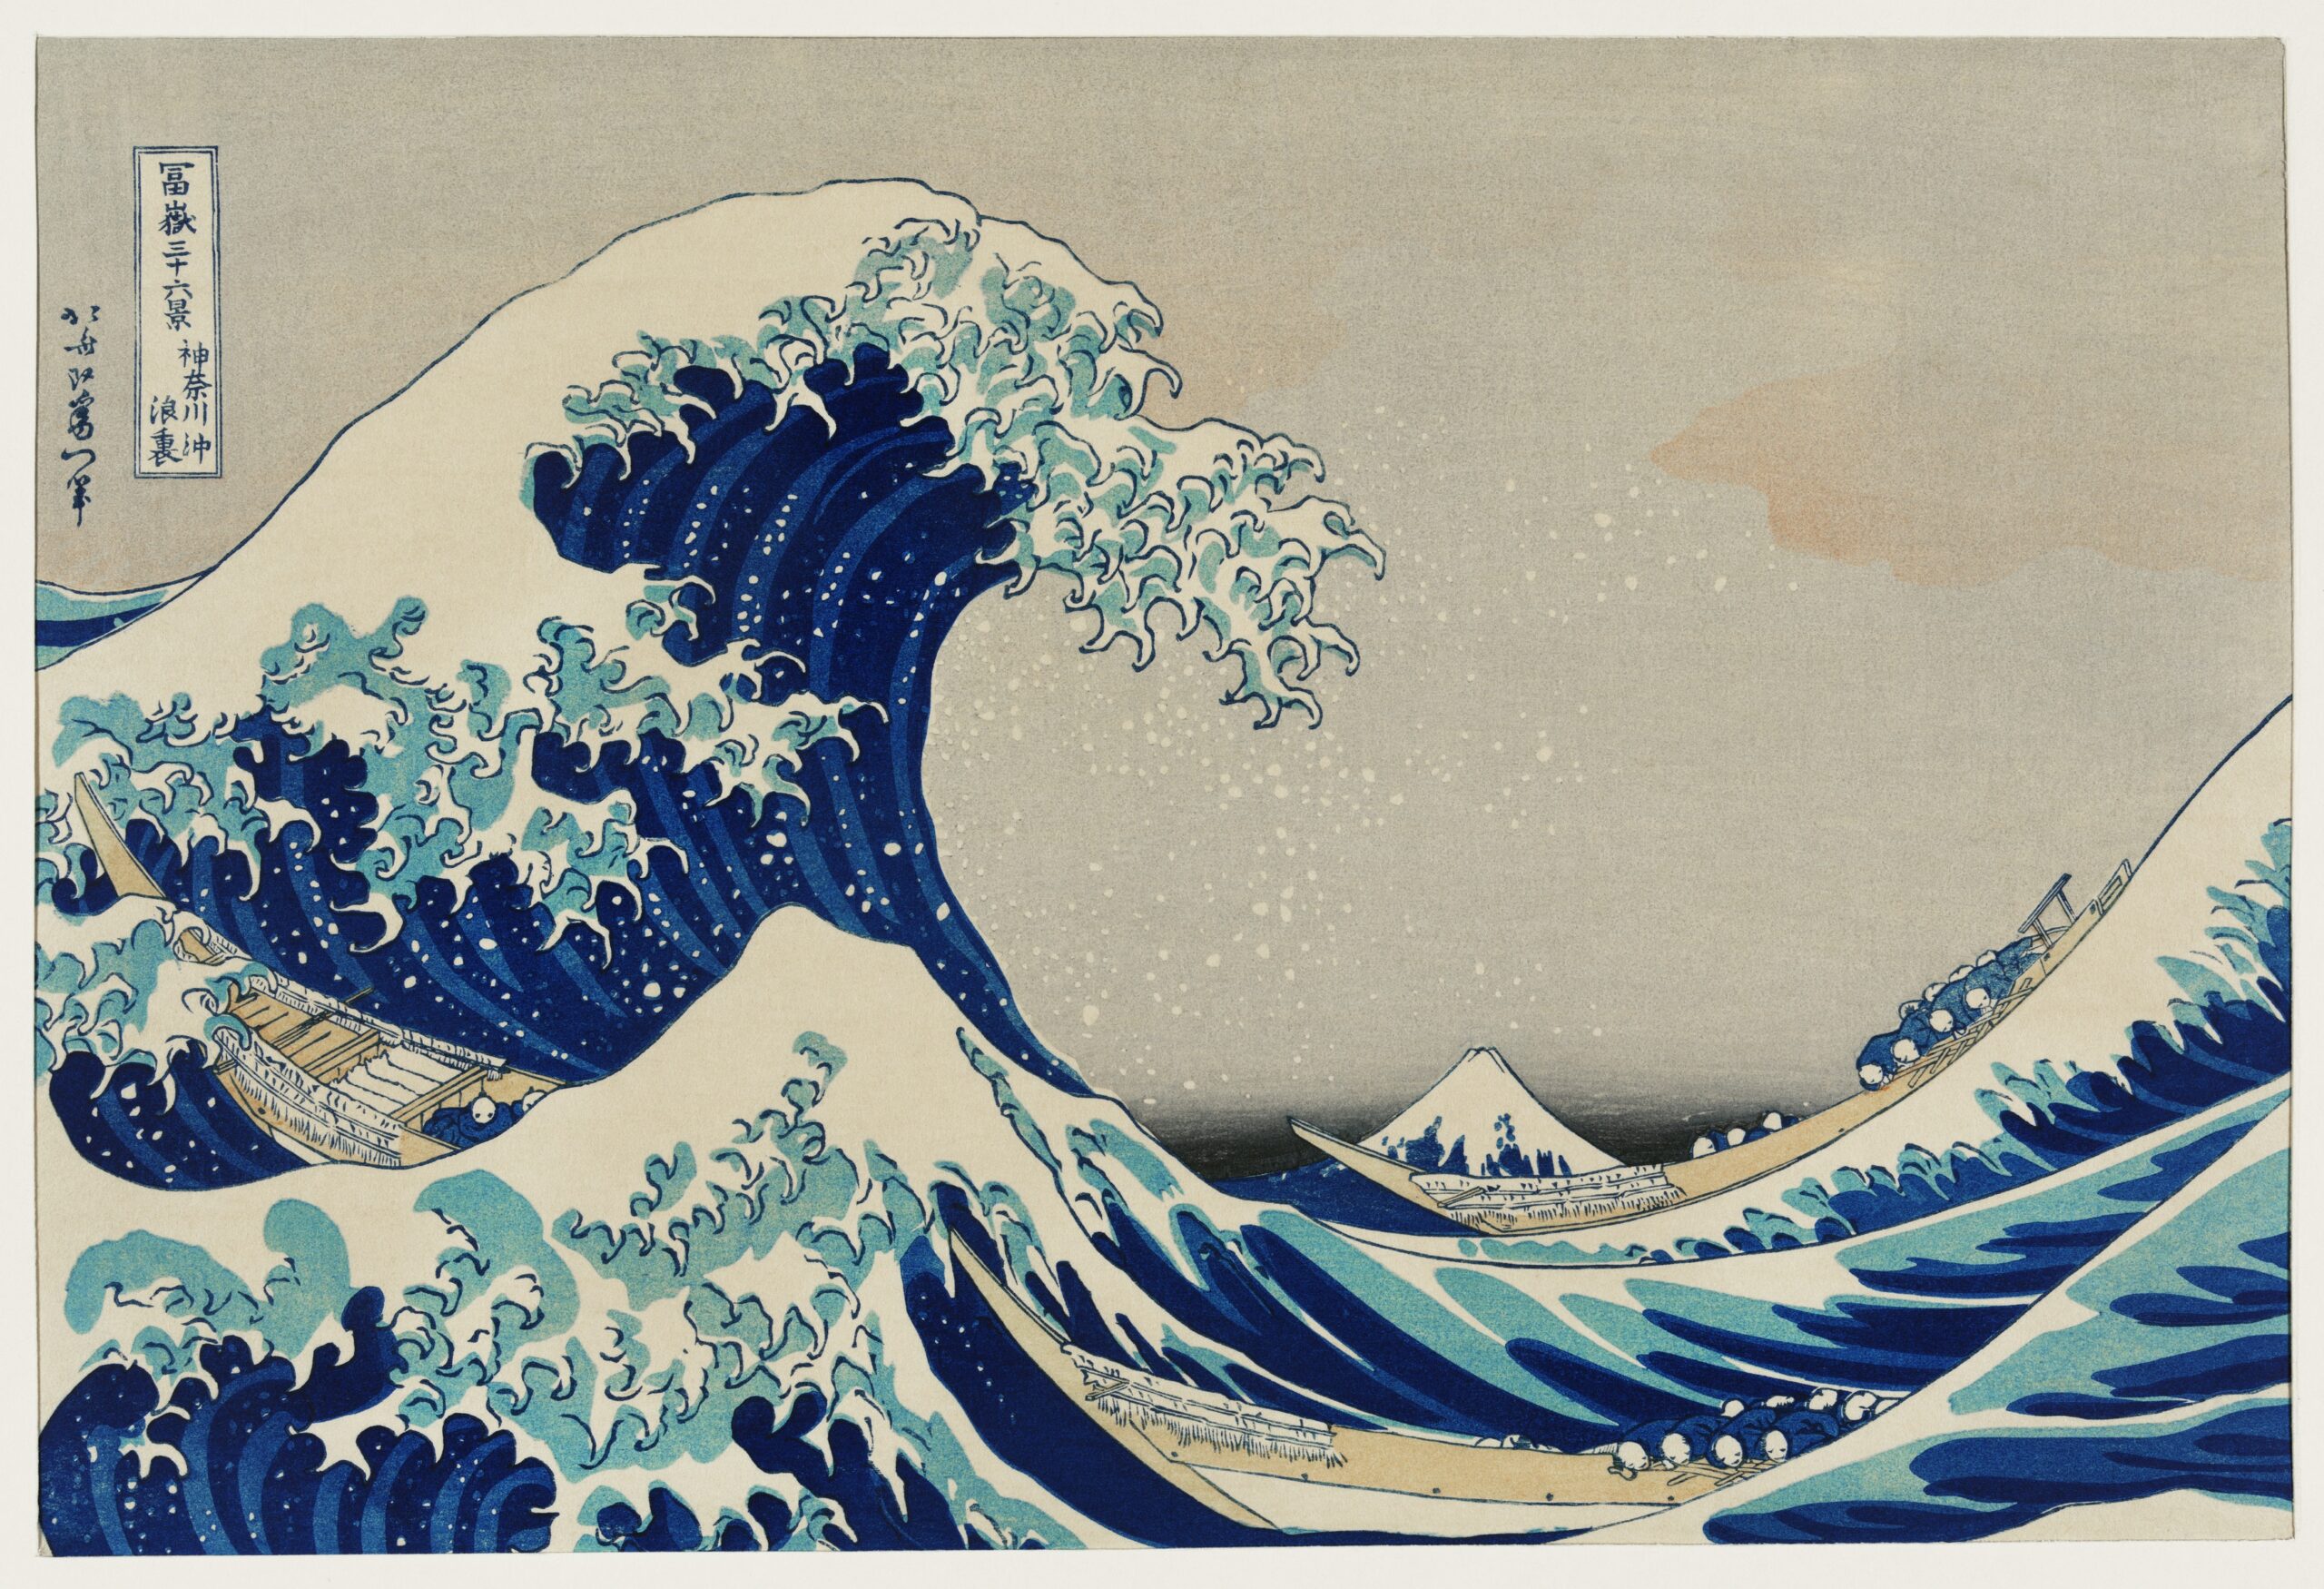 Kanazawa Oki Nami Ura by Katsushika Hokusai. A traditional Japanese Ukyio-e style illustration of extreme waves bearing down on the boats with a view of Mount Fuji.